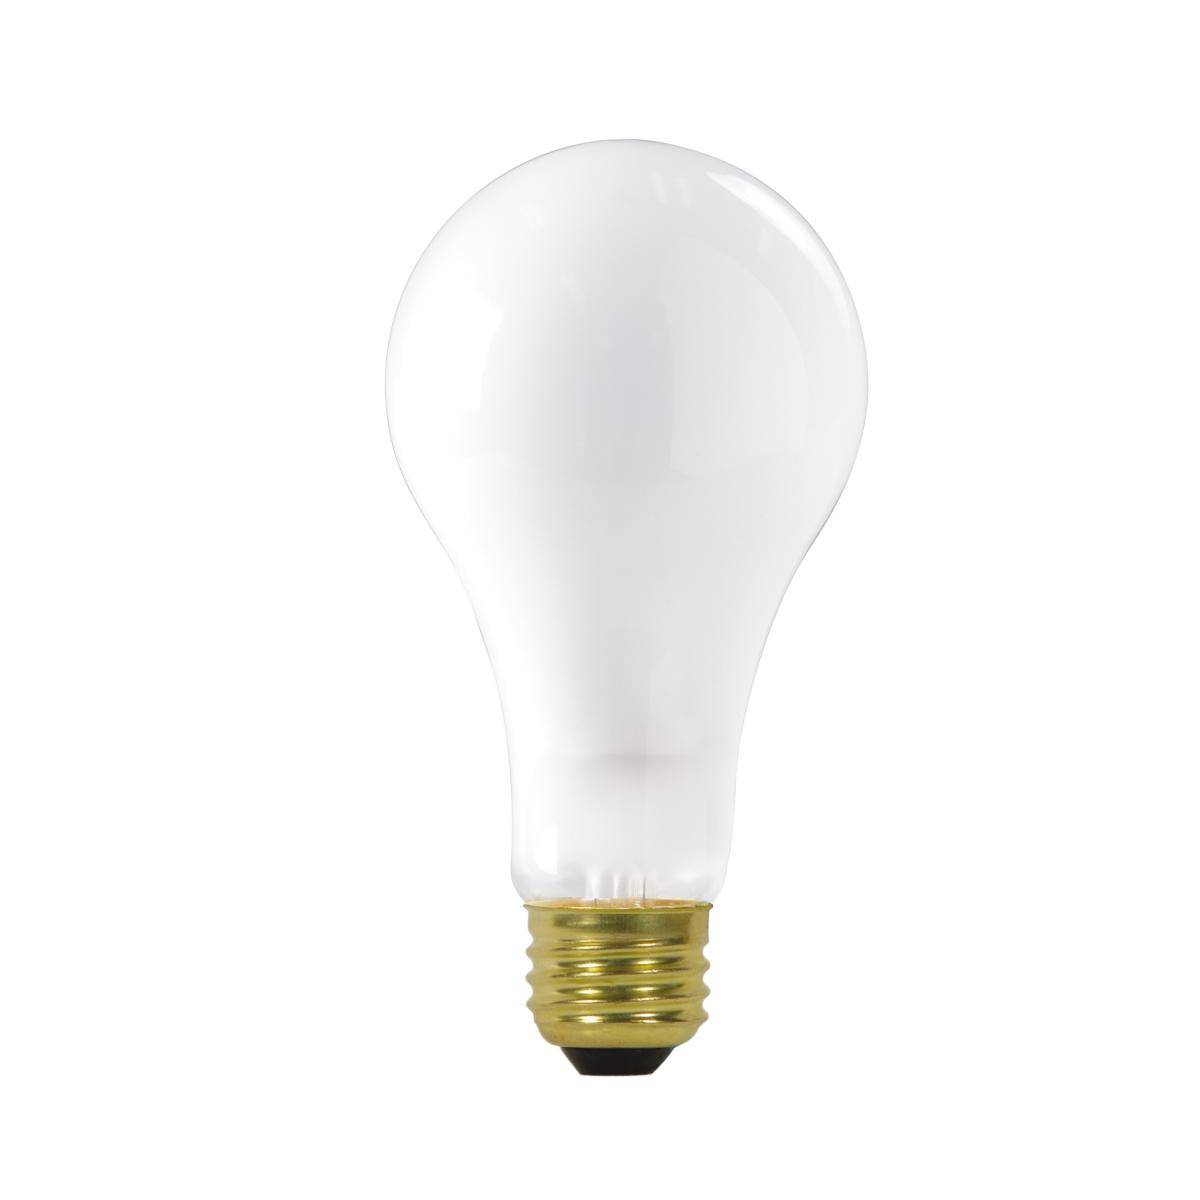 SATCO® S3945 General Service Incandescent Lamp, 150 W, E26 Medium, A21 Shape, 2670 Lumens Initial